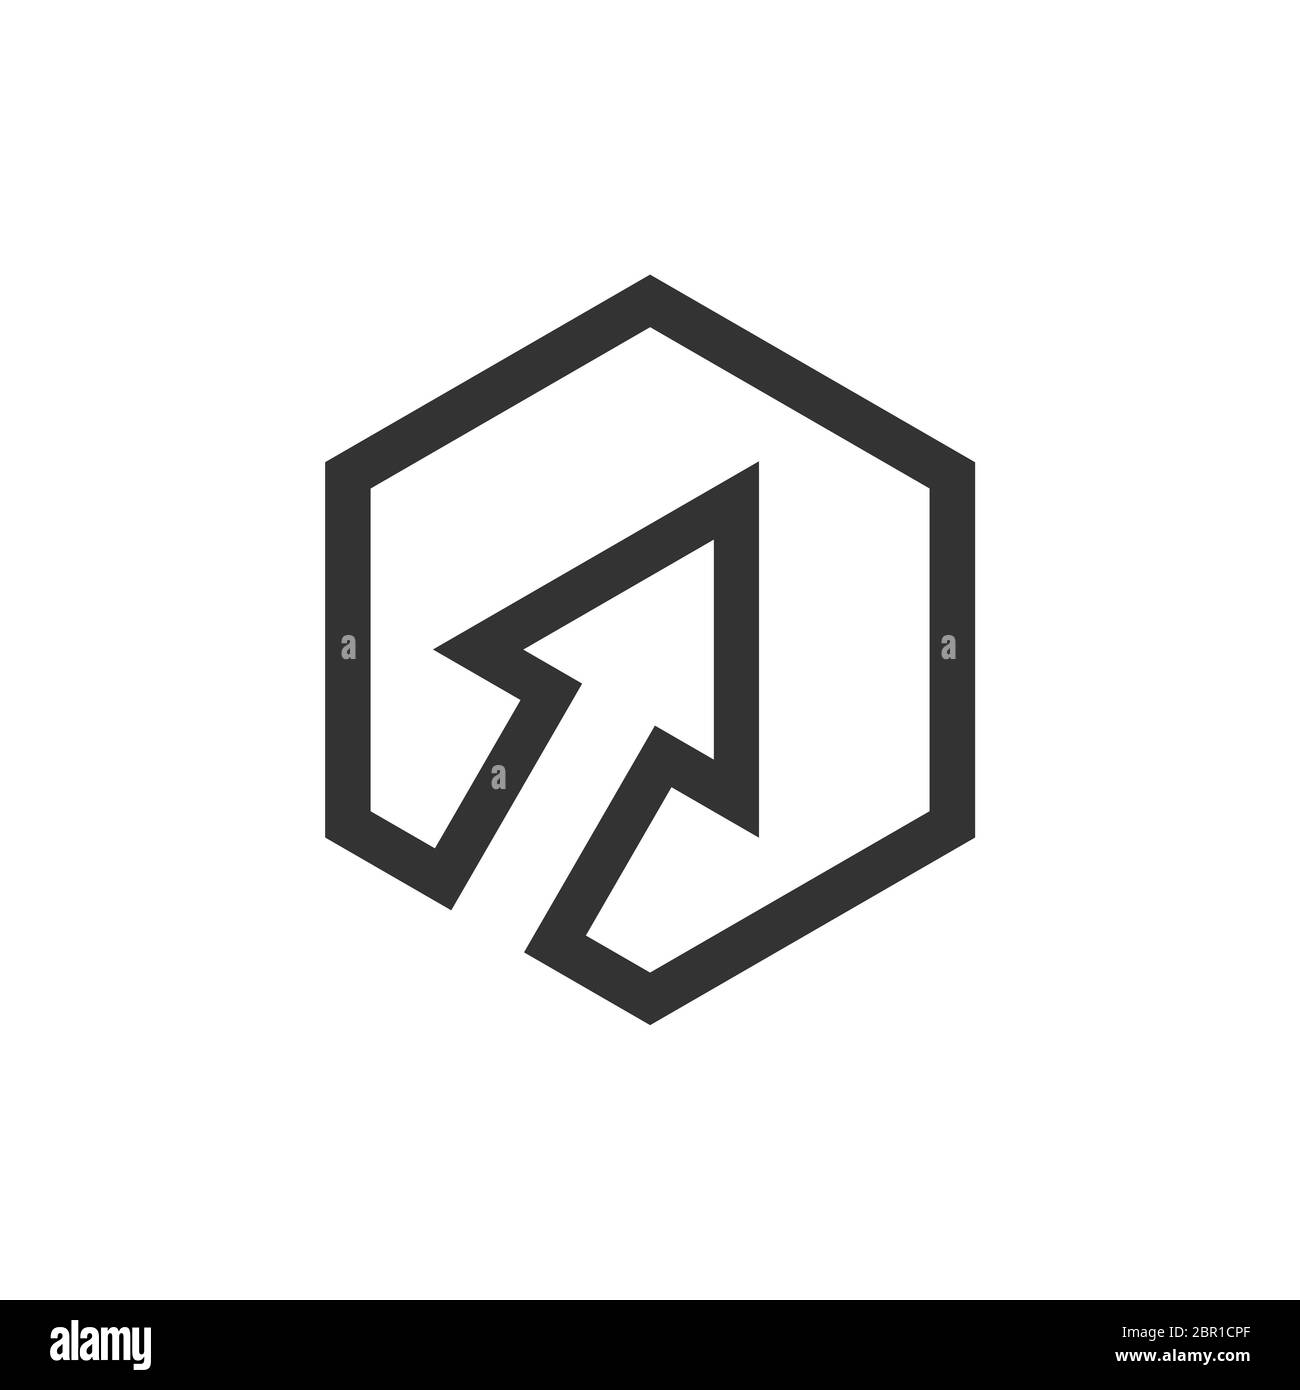 Pfeil Linie Hexagon Form Logo Vorlage Illustration Design. Vektor EPS 10. Stockfoto